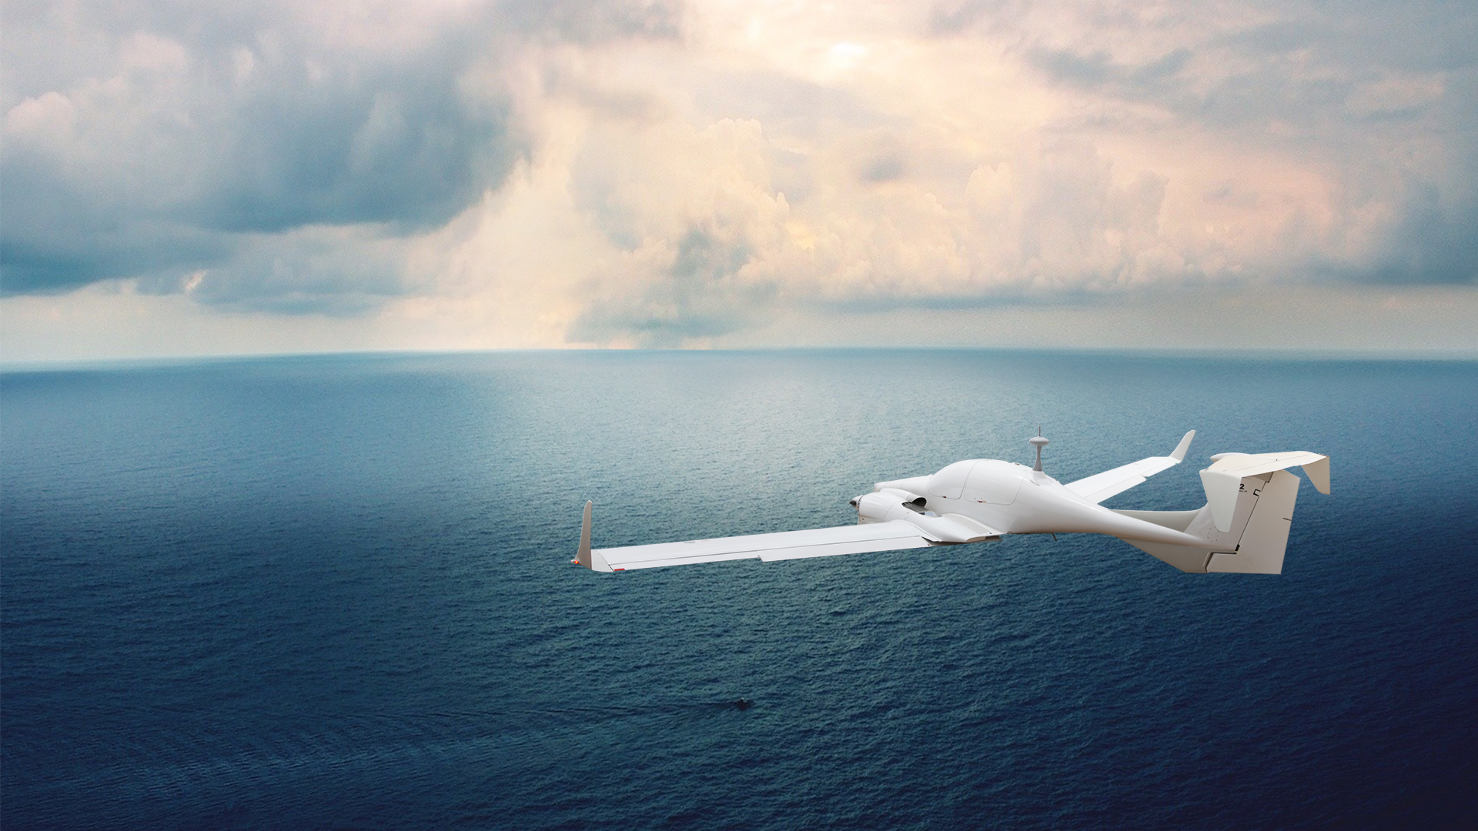 Rafael acquiert la société de drones Aeronautics